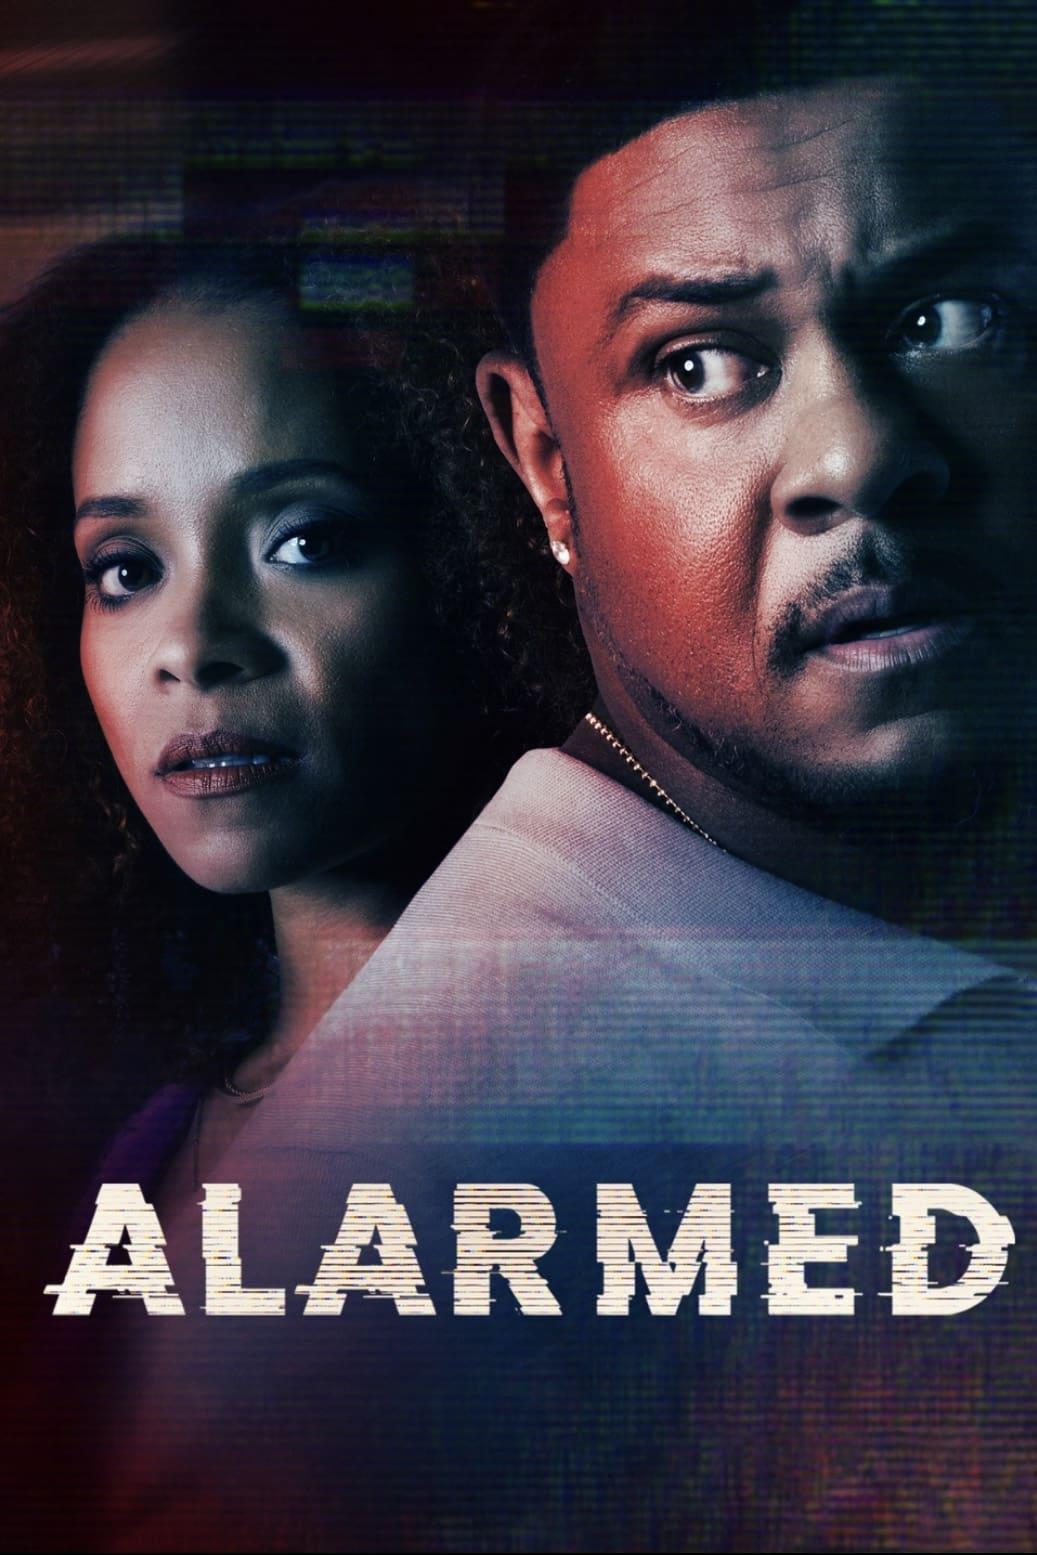 Alarmed poster